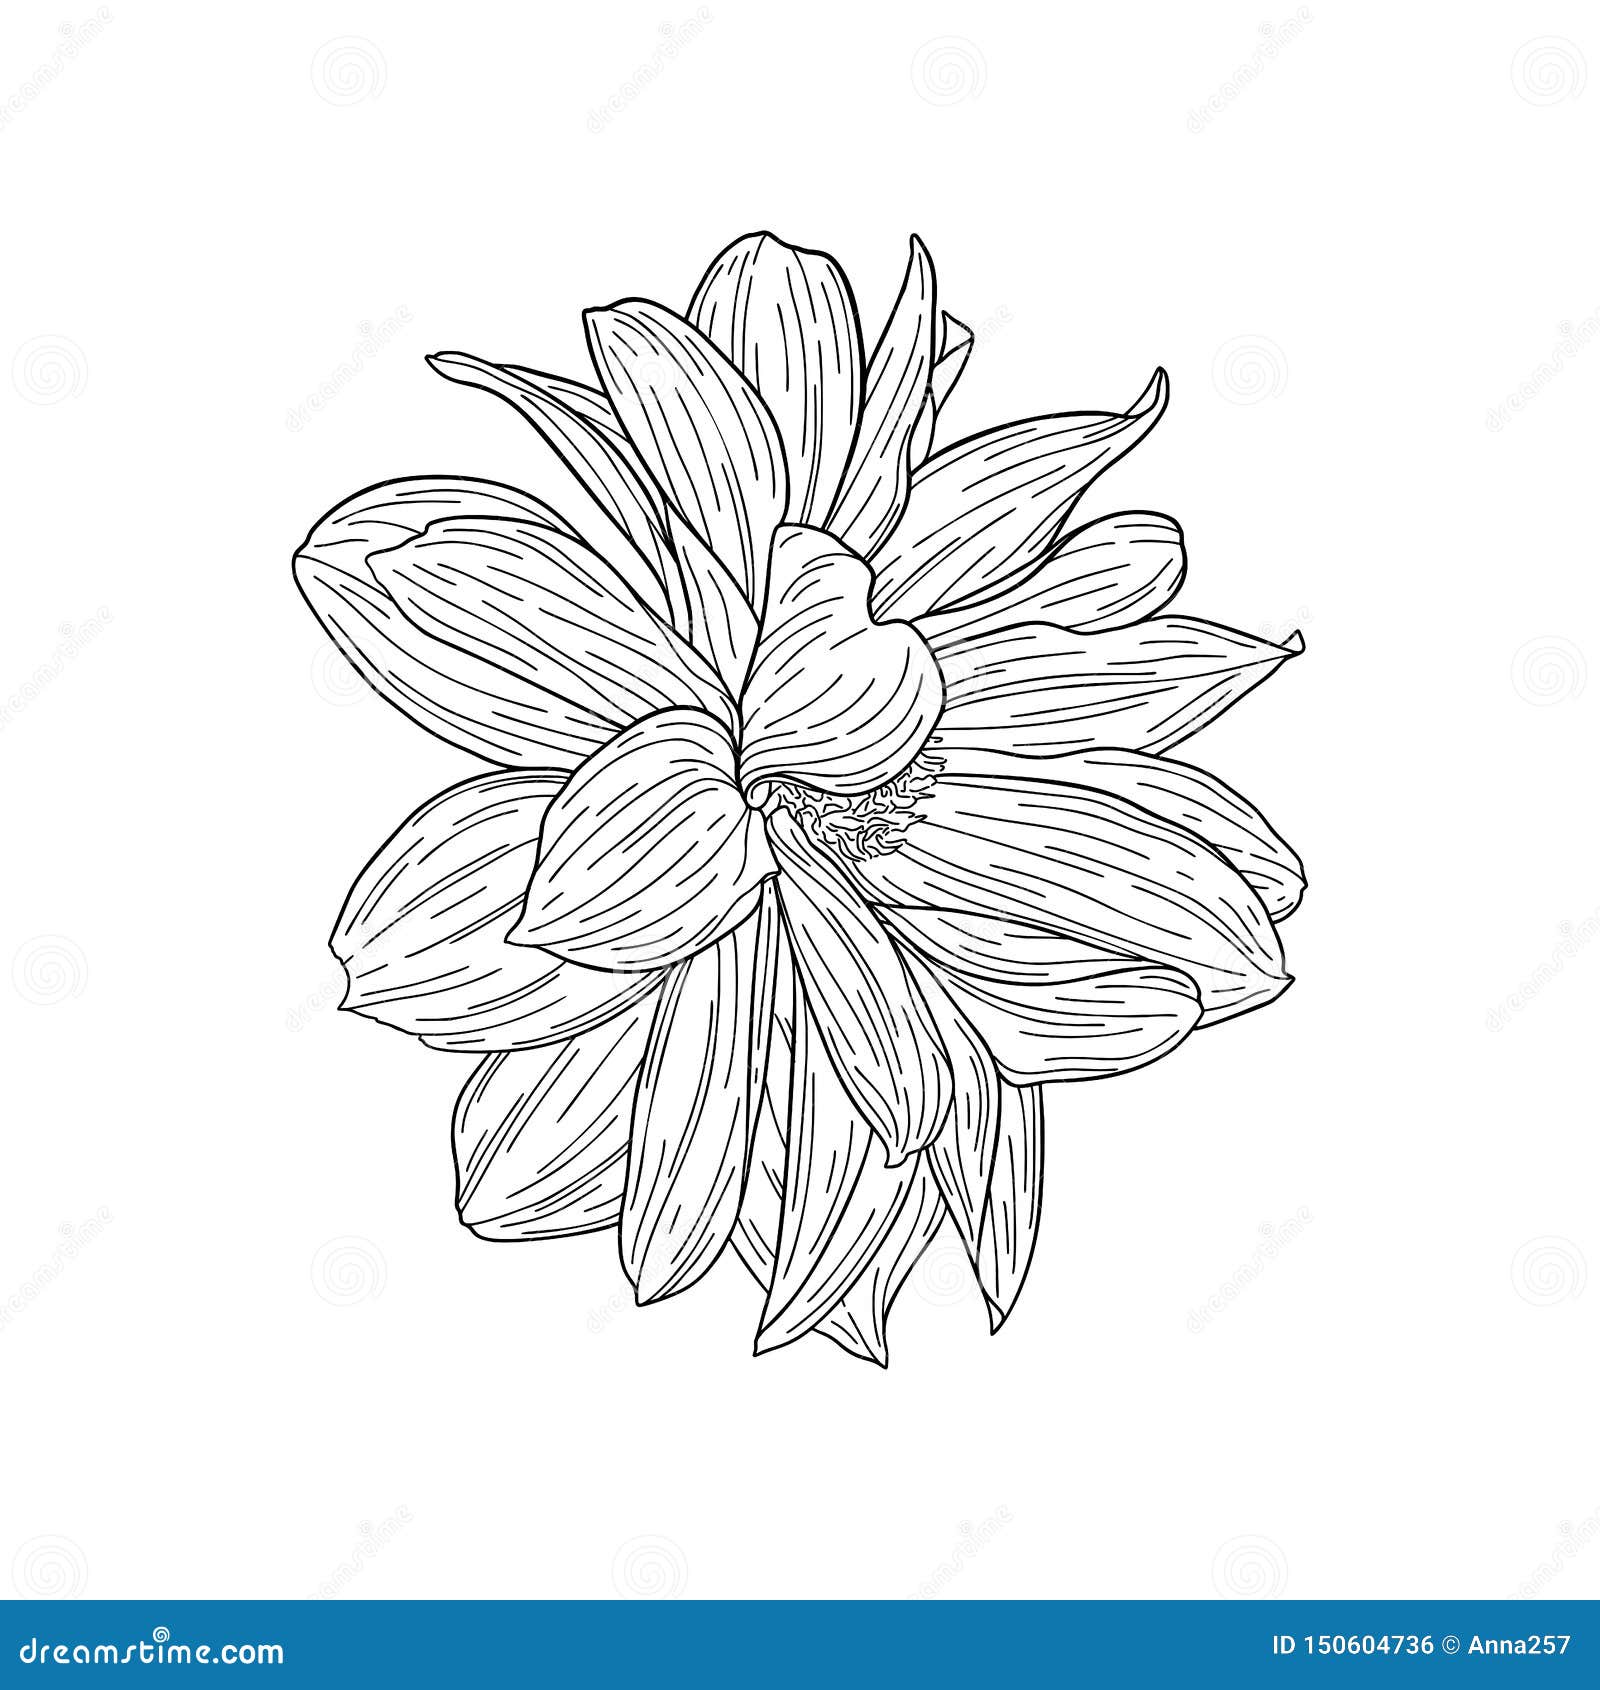 Quick Ink Pen Floral Sketch Study - illustrations Jitesh Patel